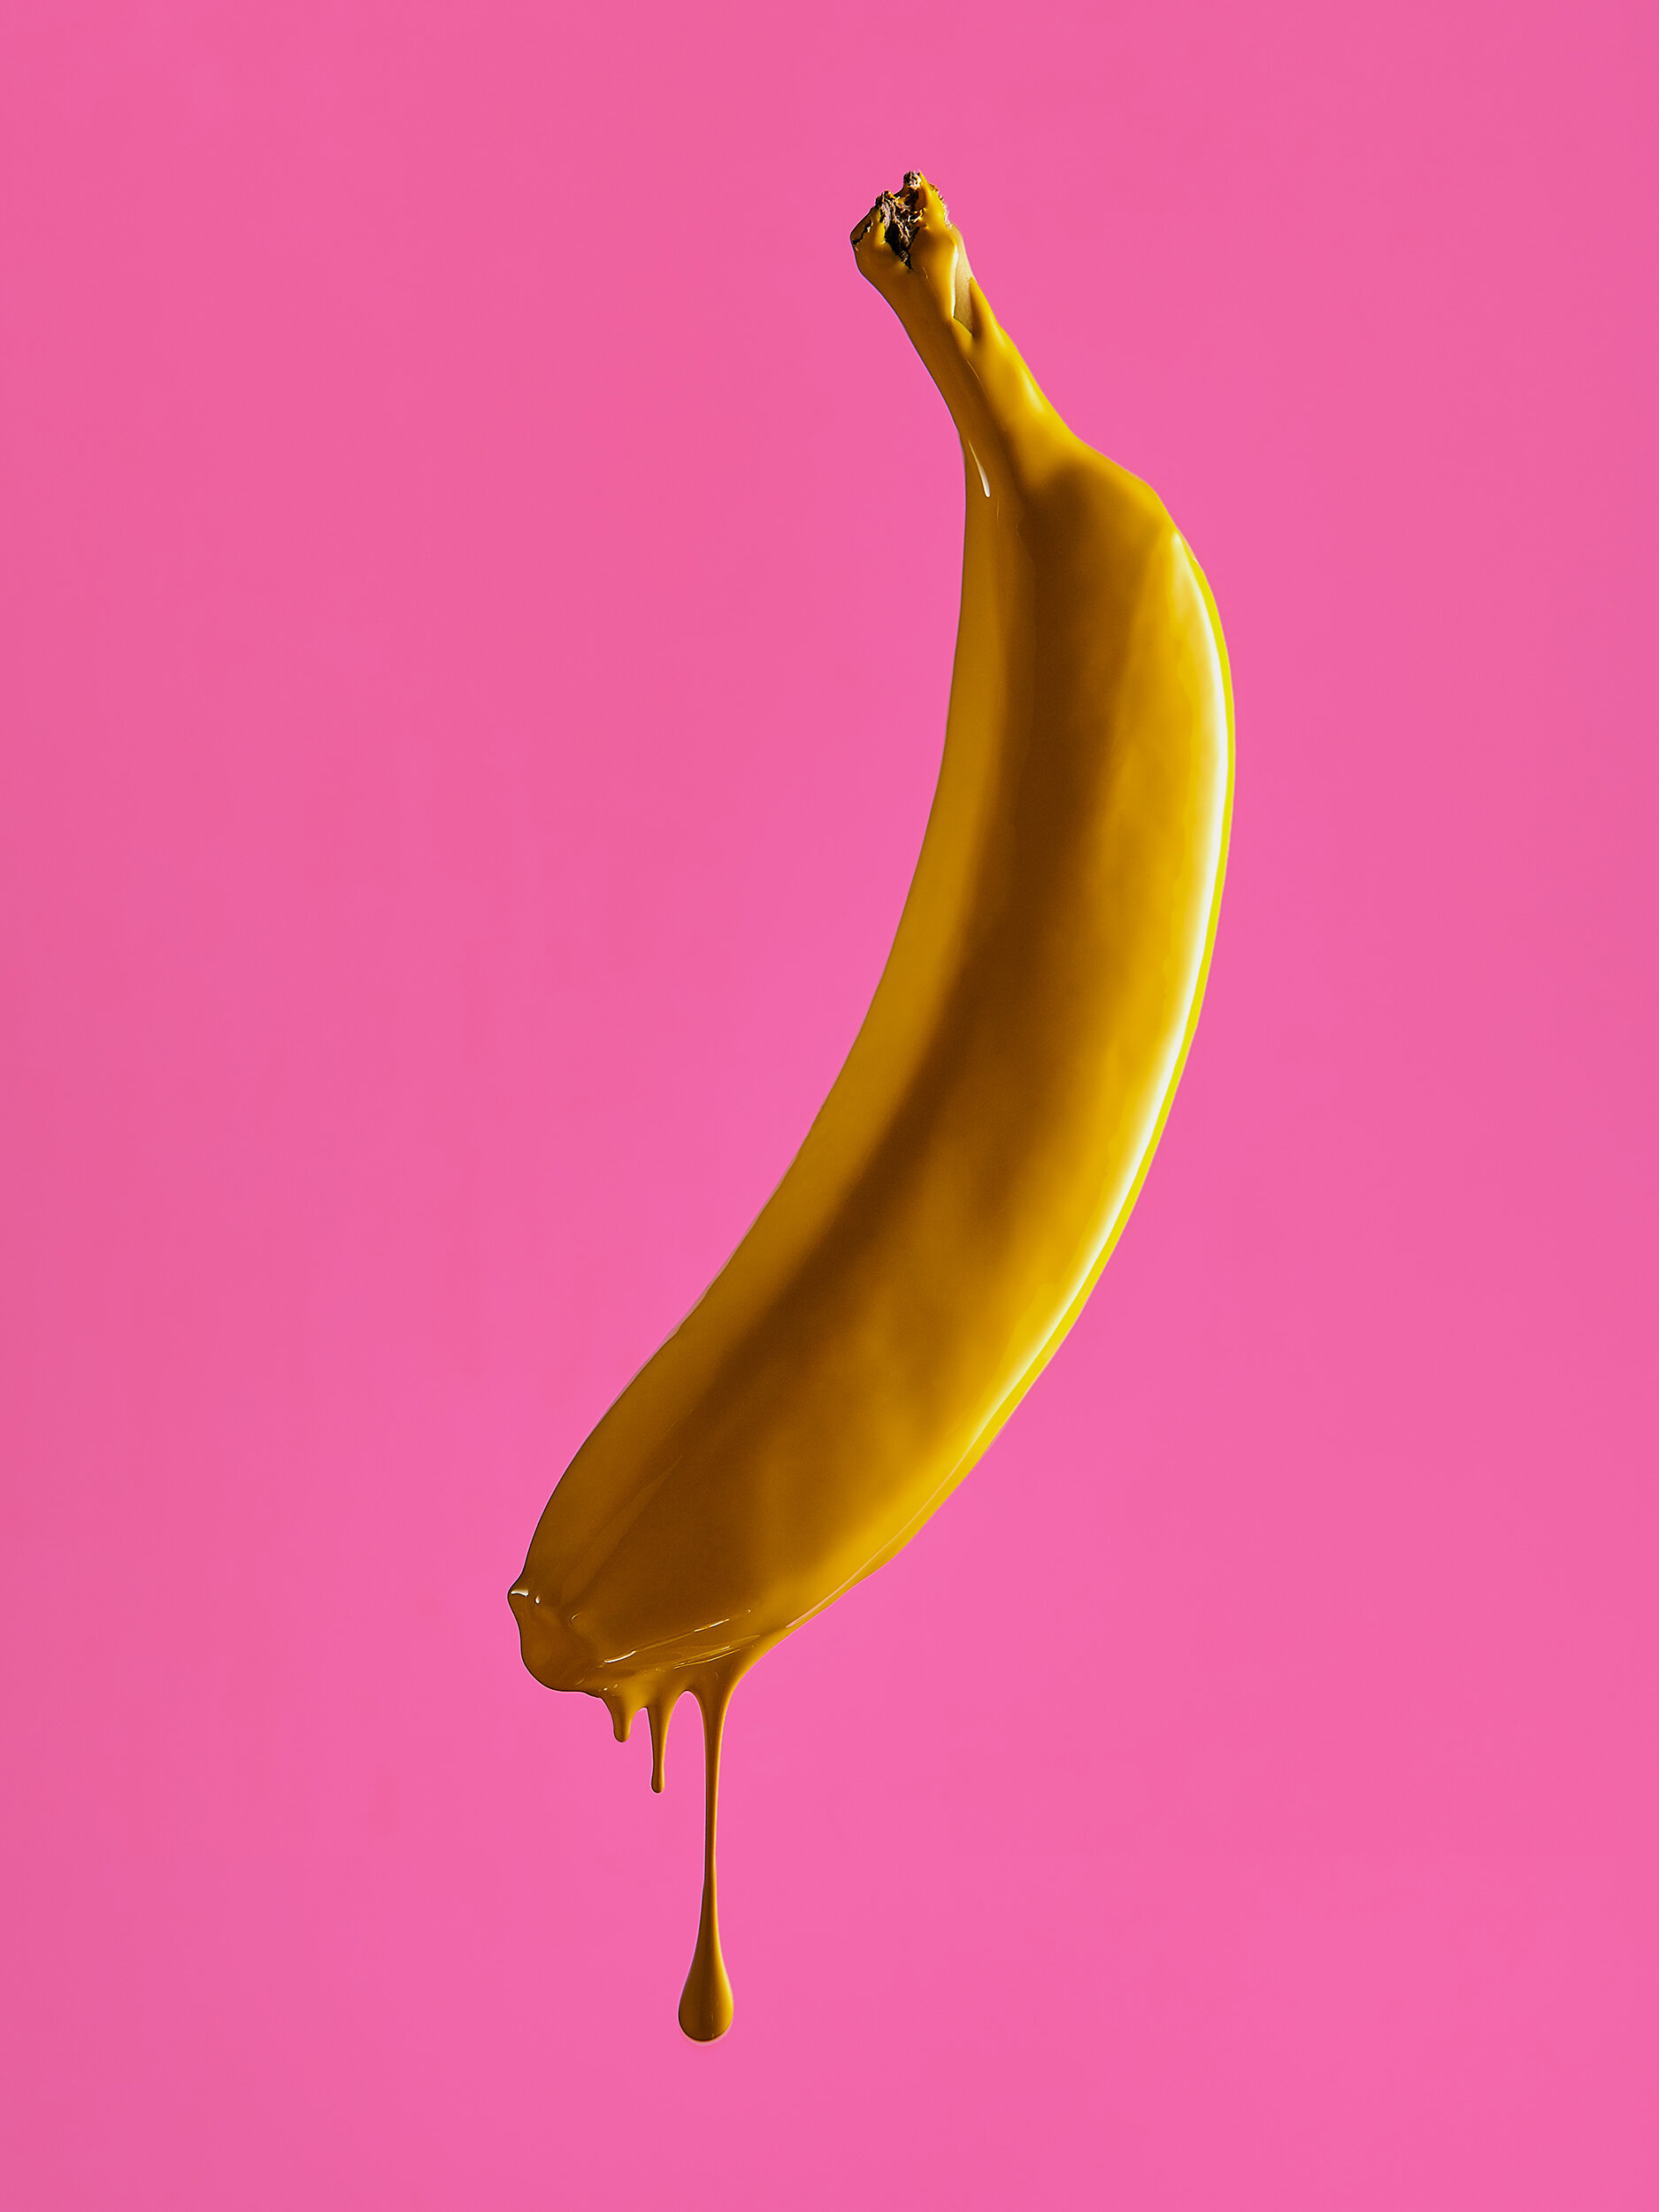 Gone_Bananas_Y-1-small.jpg